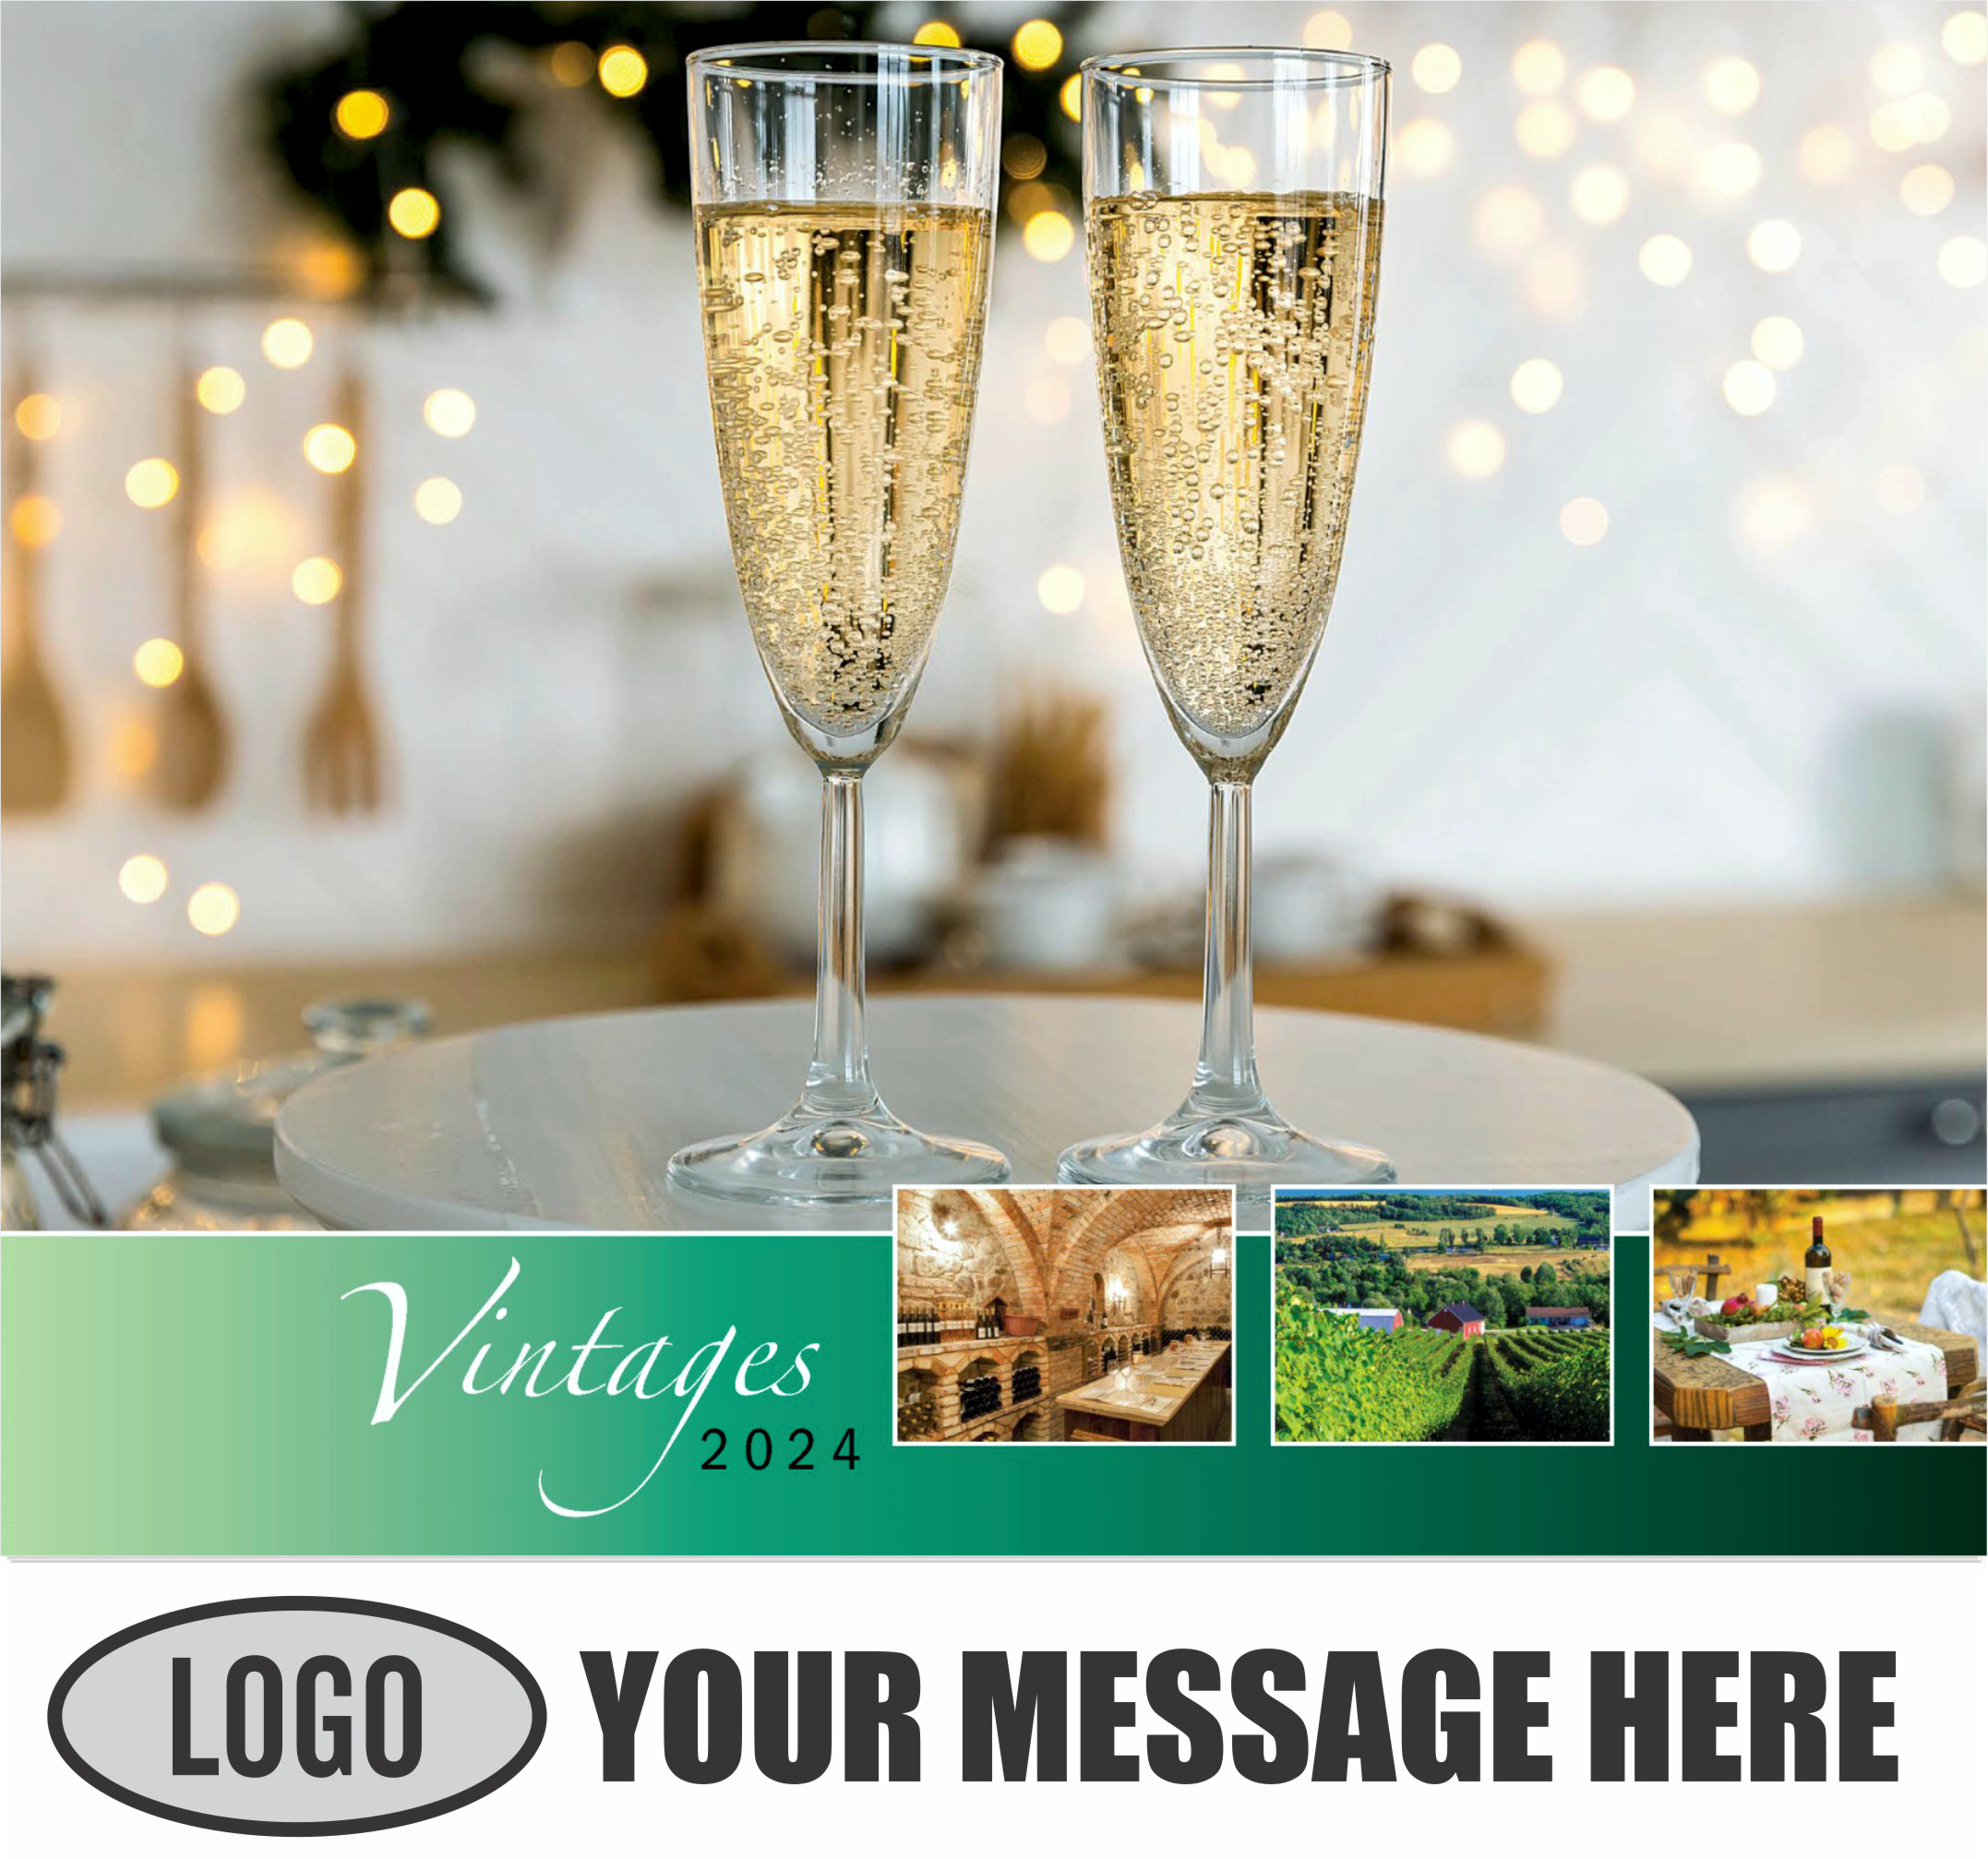 Vintages - Wine Tips 2024 Business Promo Calendar - cover